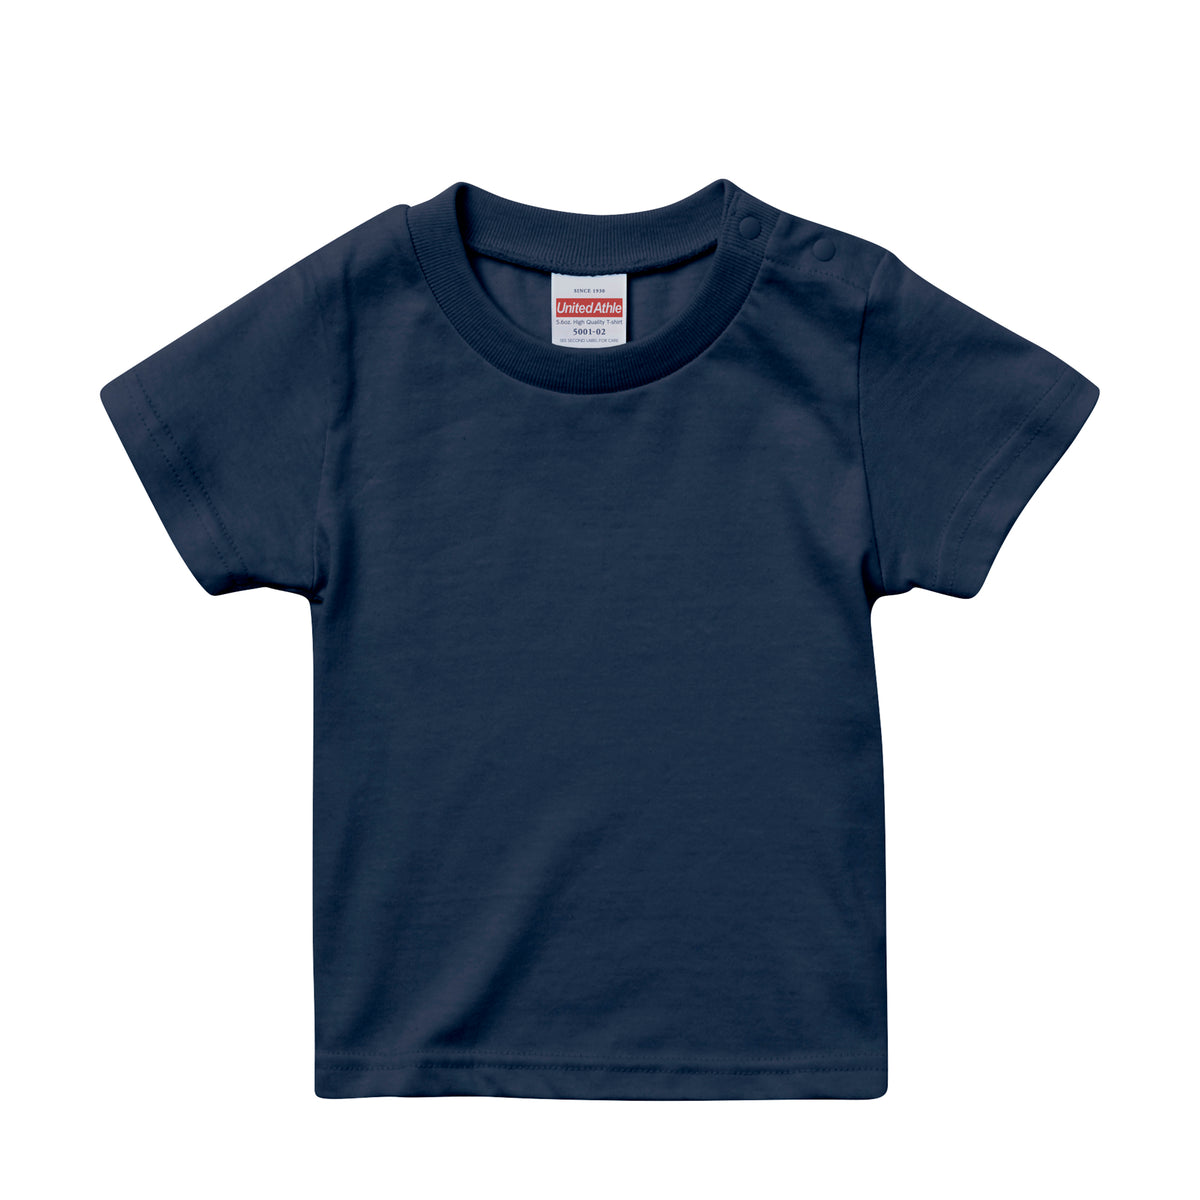 Shop ネイビー(紺) at Tshirt.st公式 | Tshirt.st公式